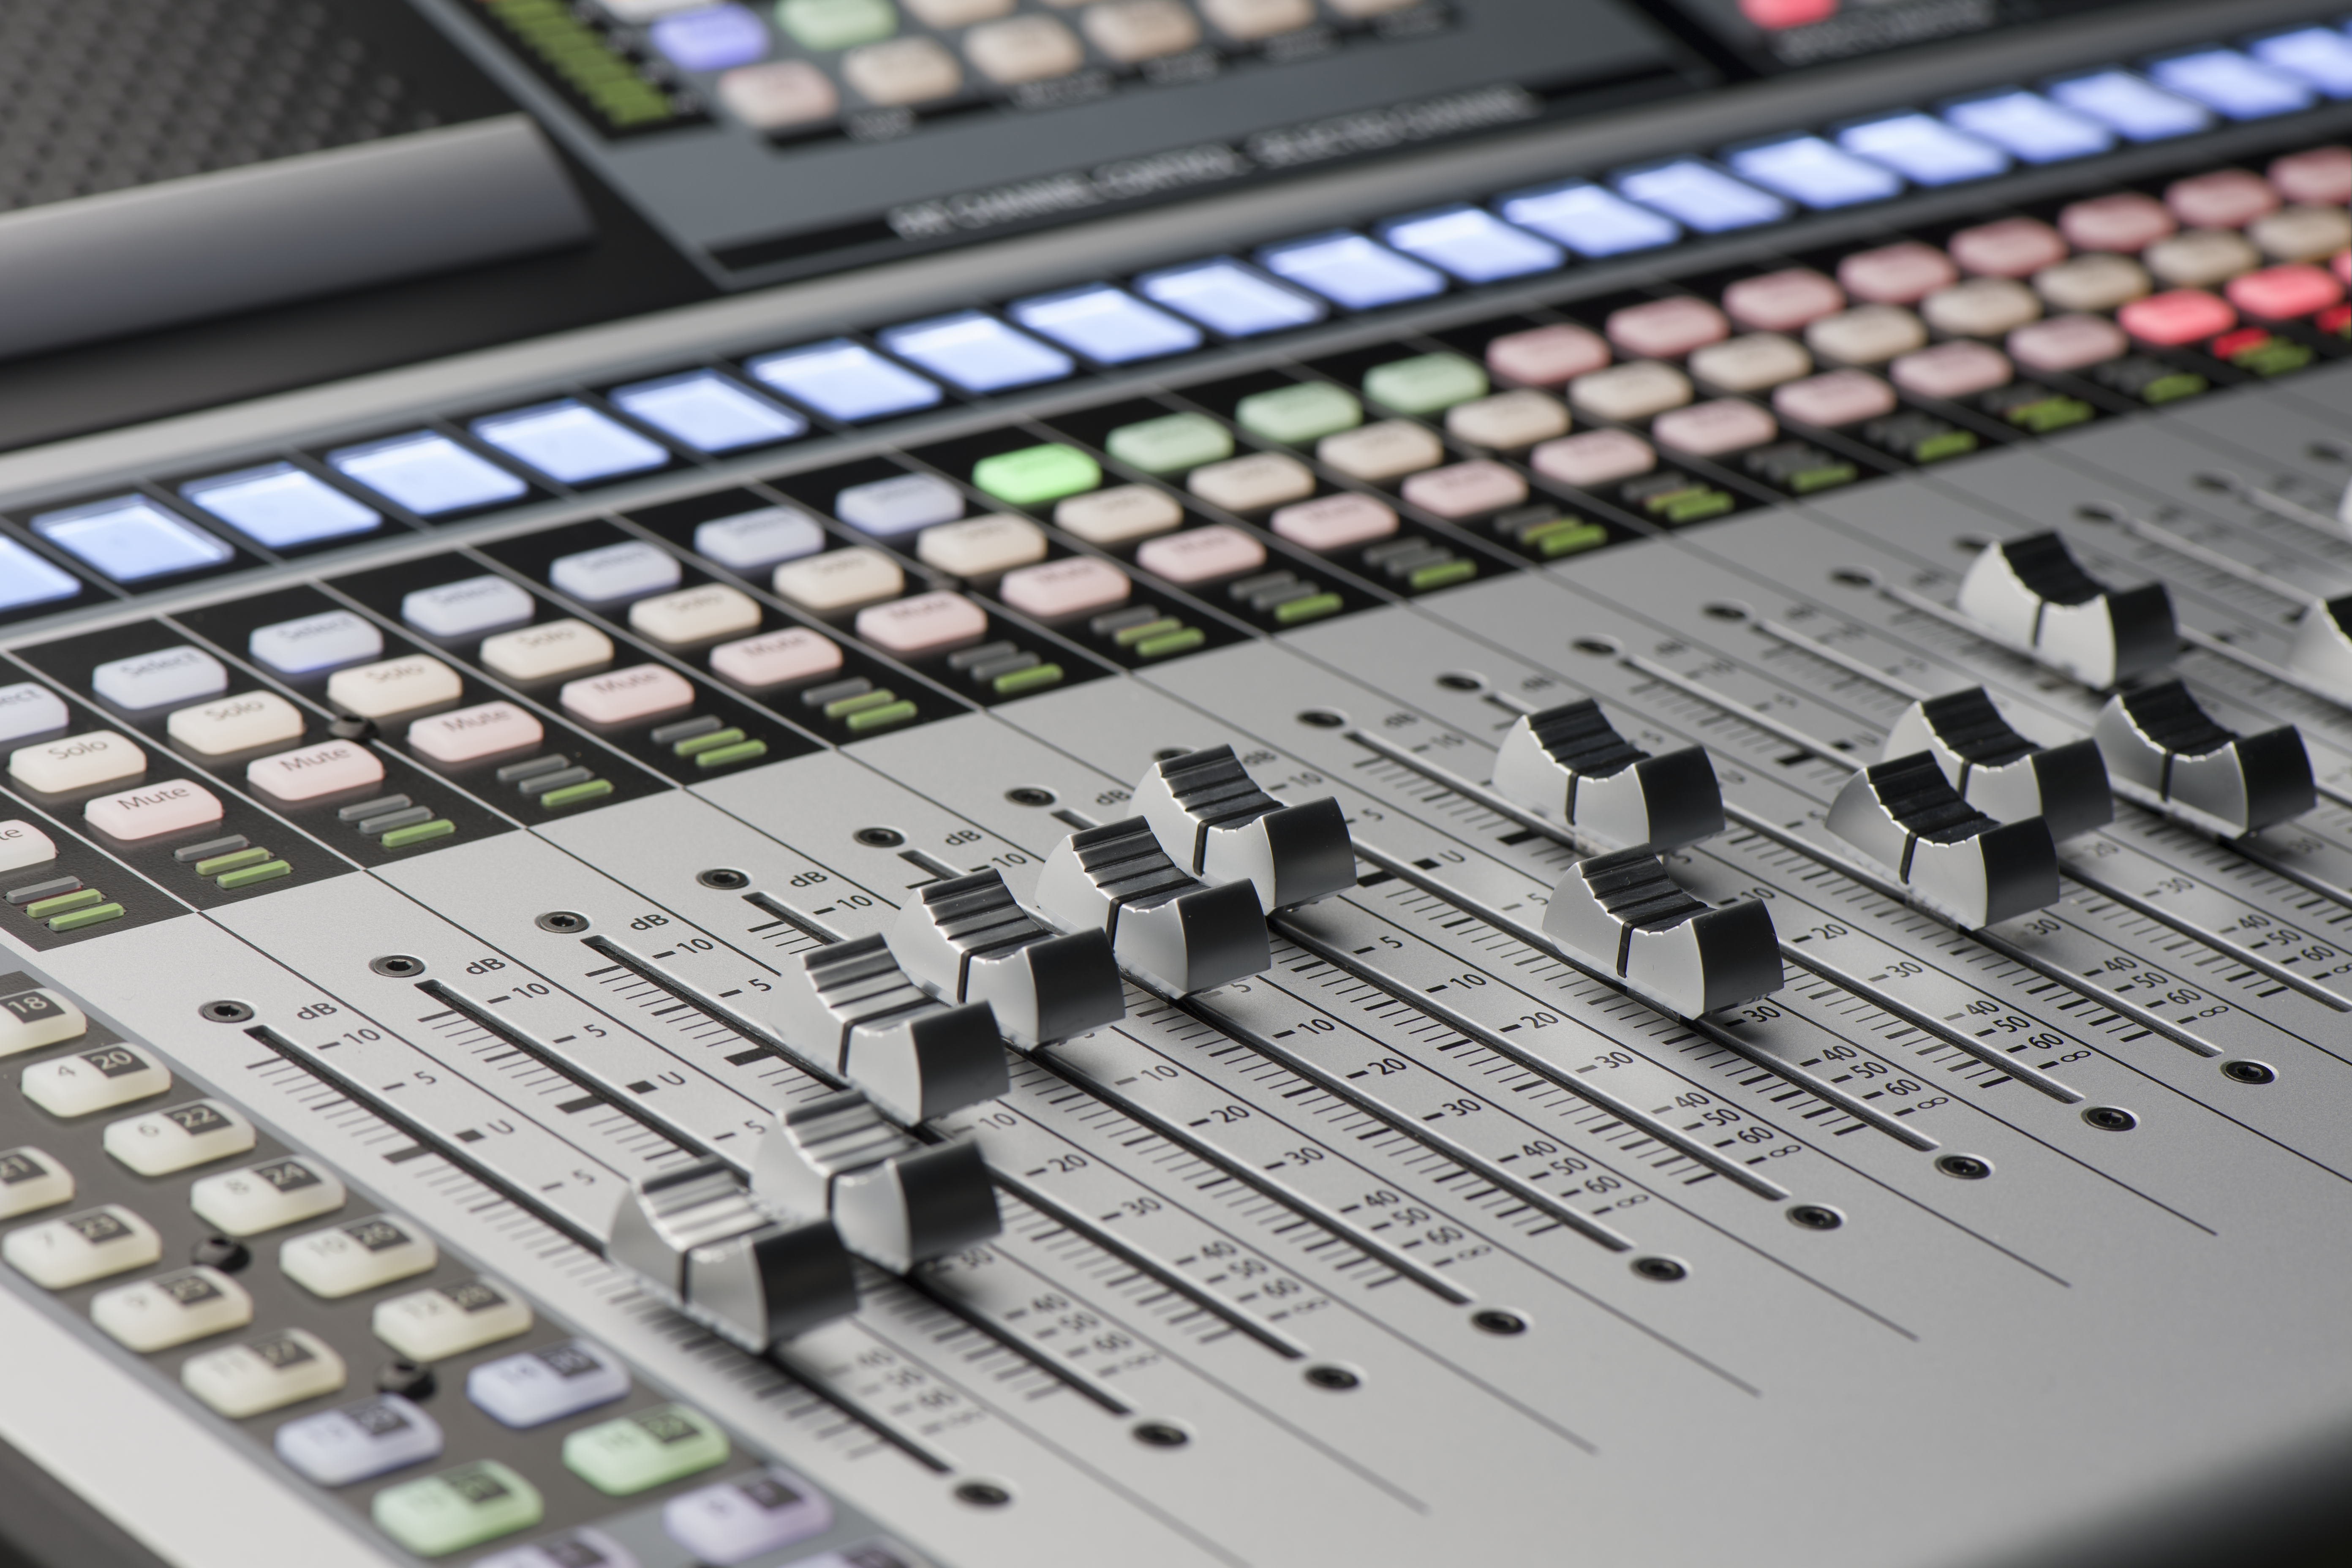 Presonus Studiolive 32s - Digital mixing desk - Variation 6